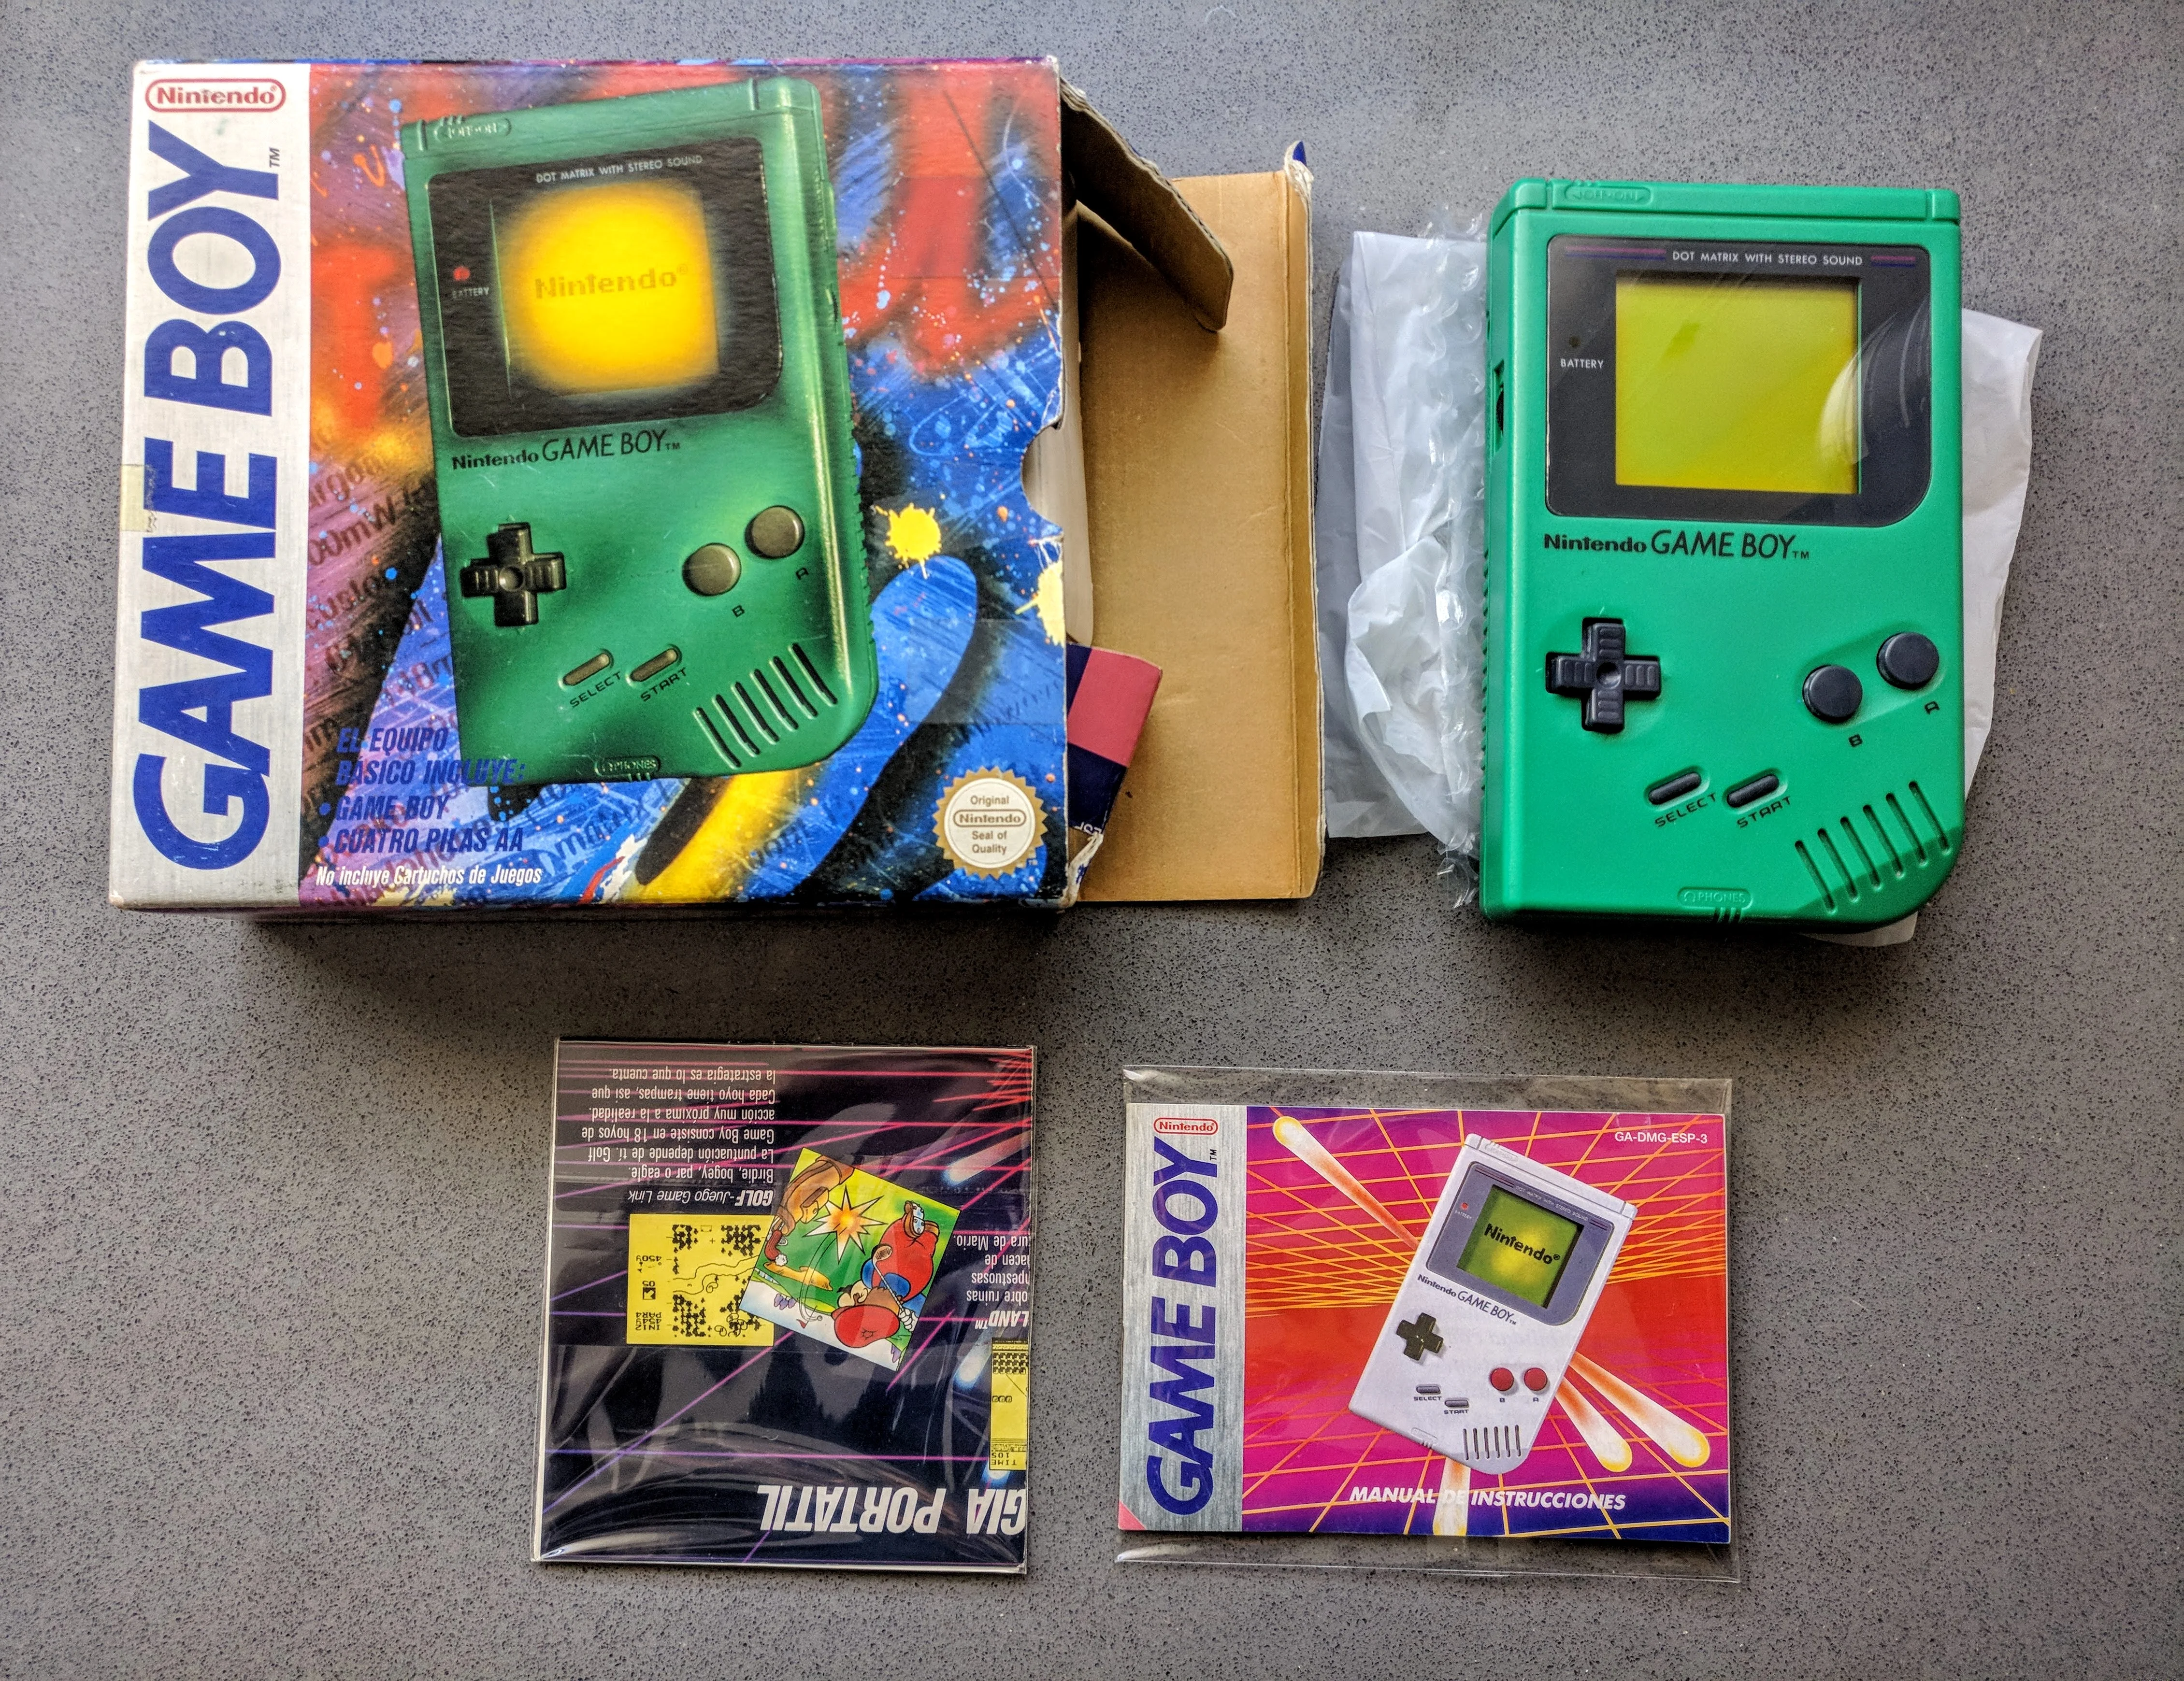  Nintendo Game Boy Green Console [ES]